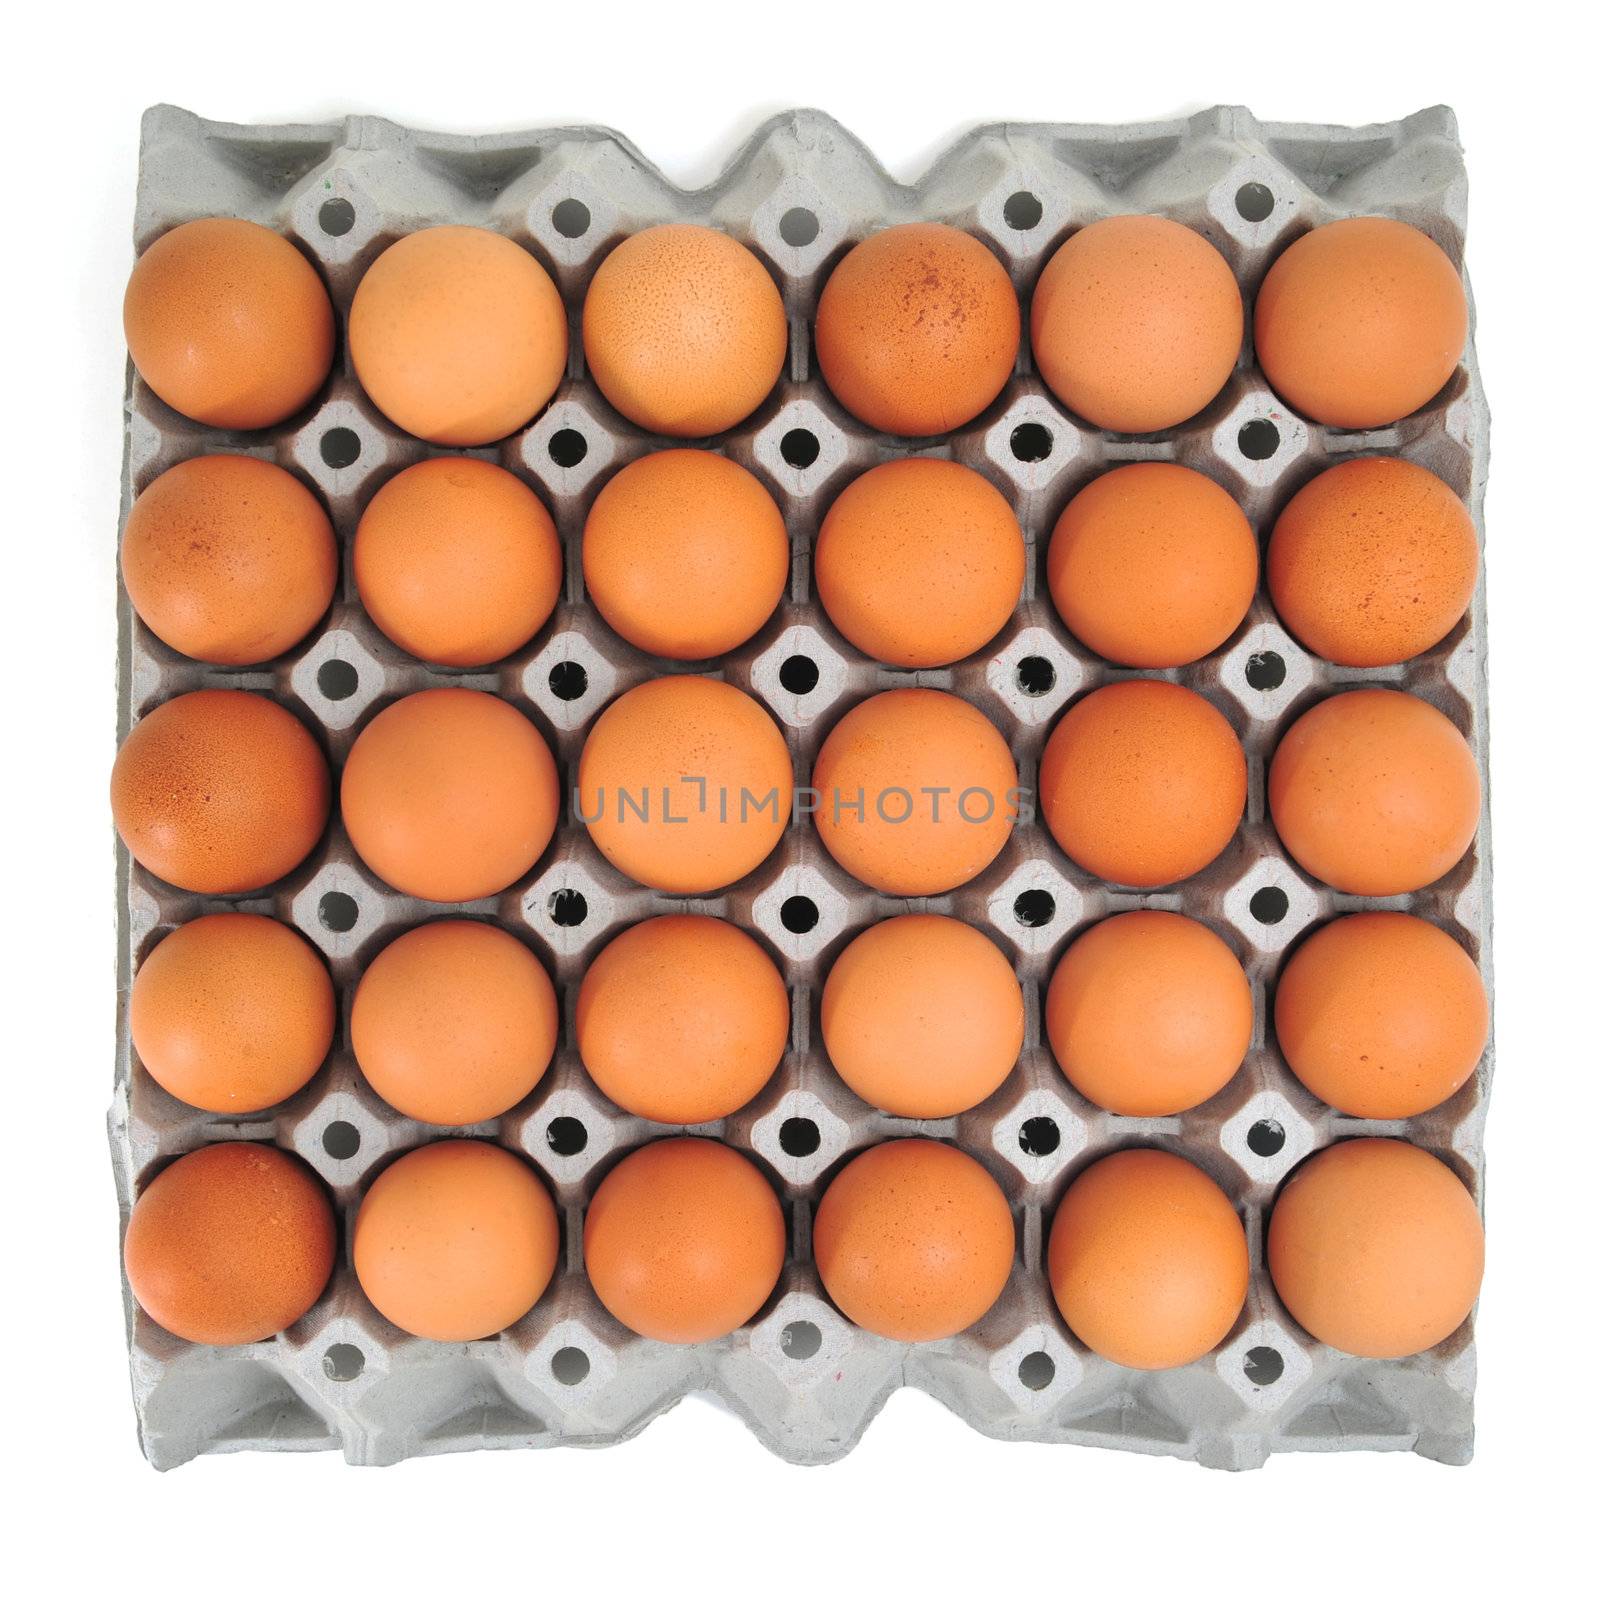 eggs by antpkr